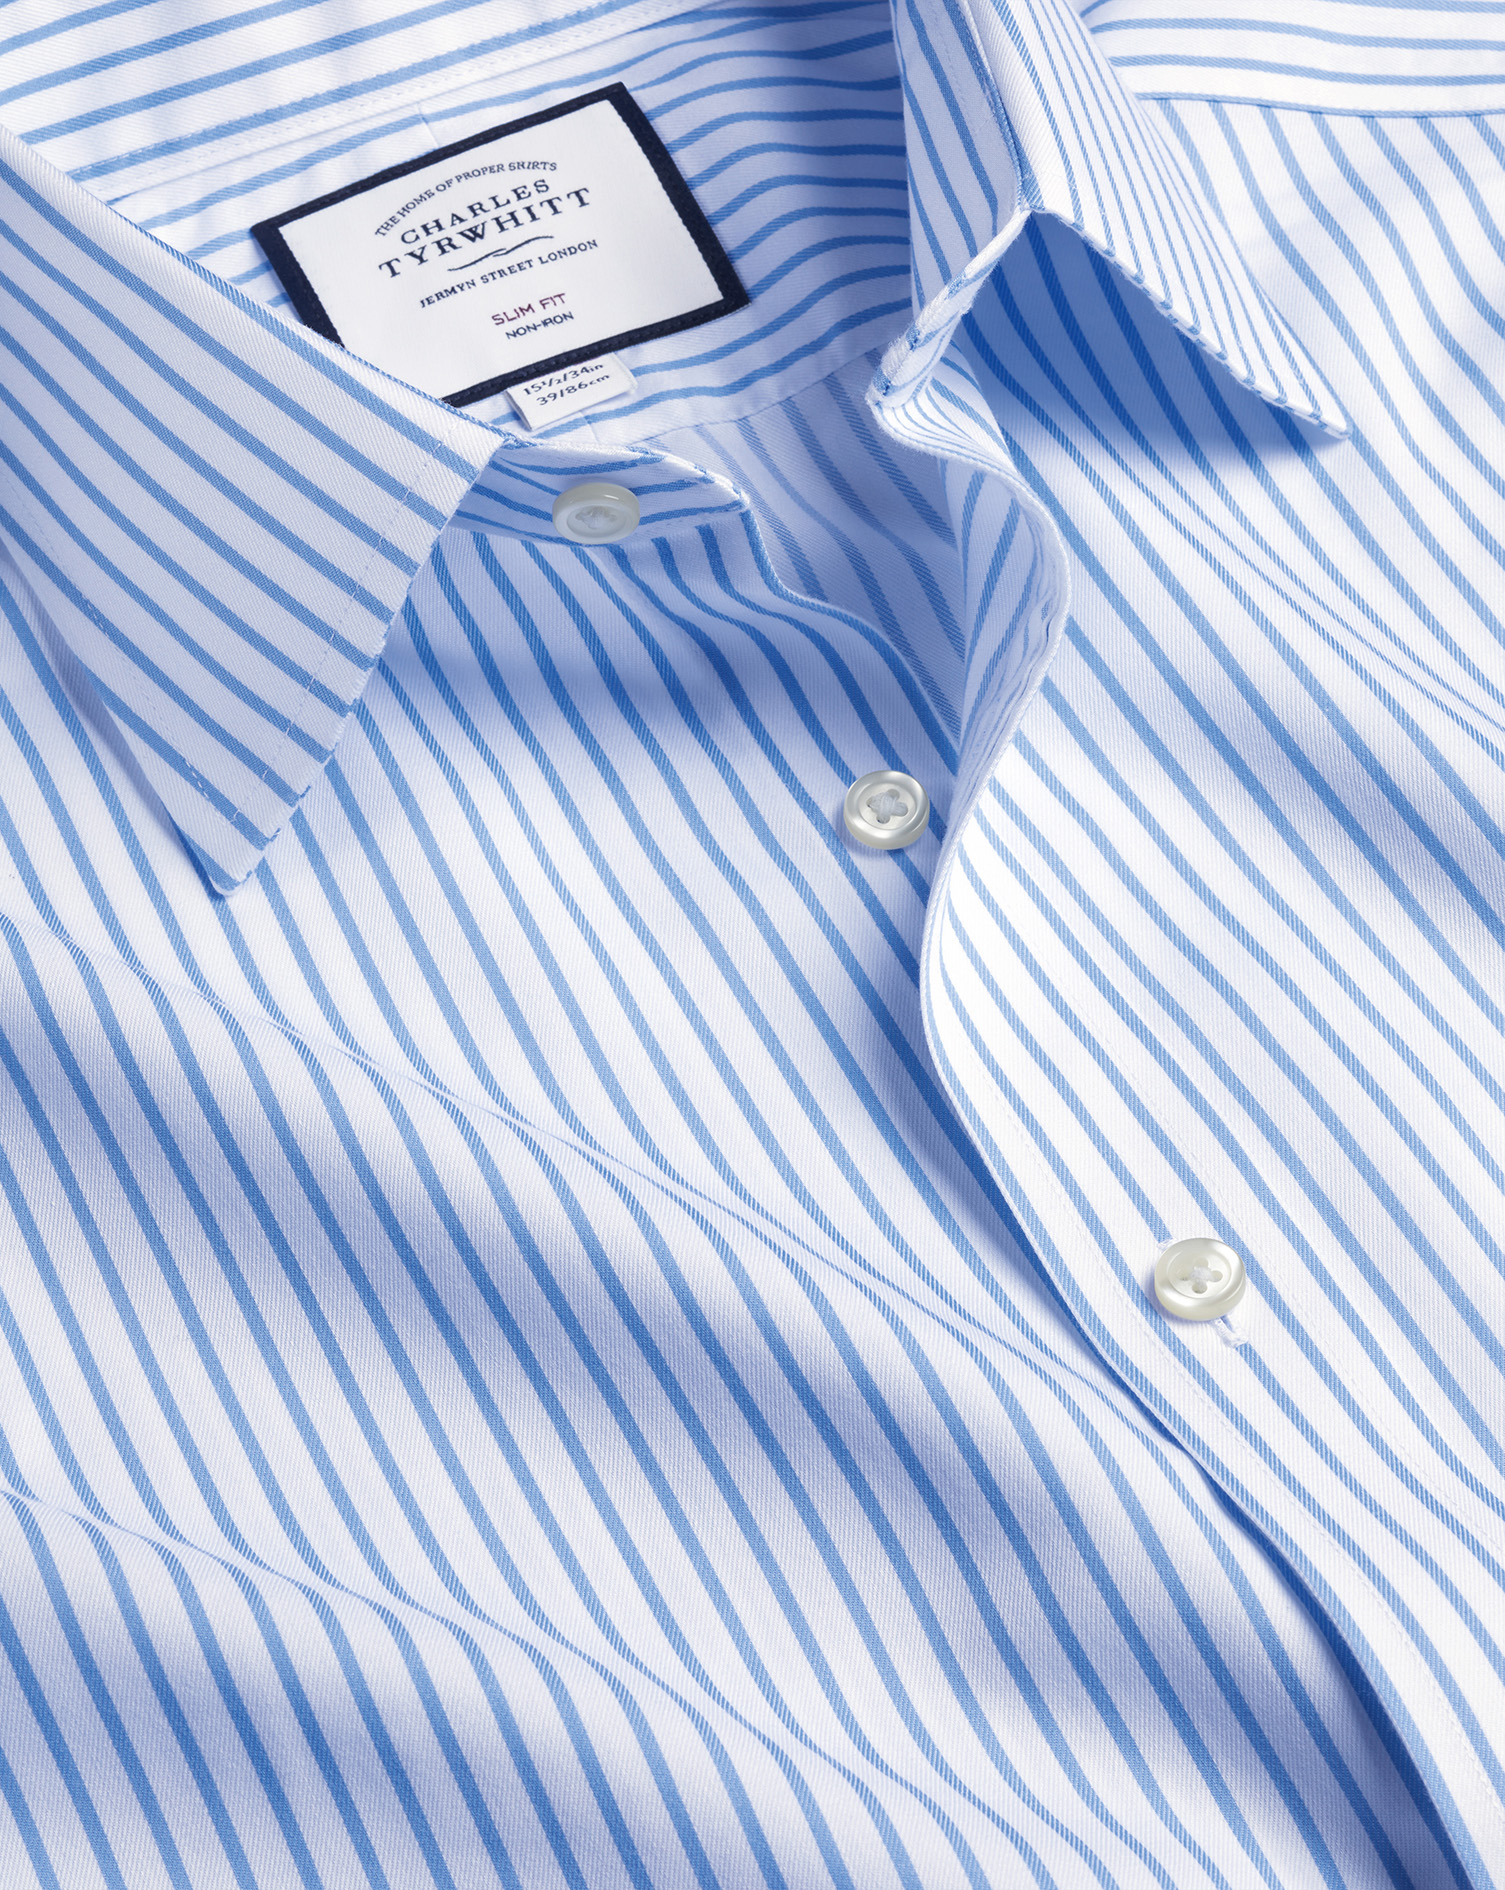 Men's Charles Tyrwhitt Non-Iron Twill Stripe Dress Shirt - Cornflower Blue Single Cuff Size XXL Cott